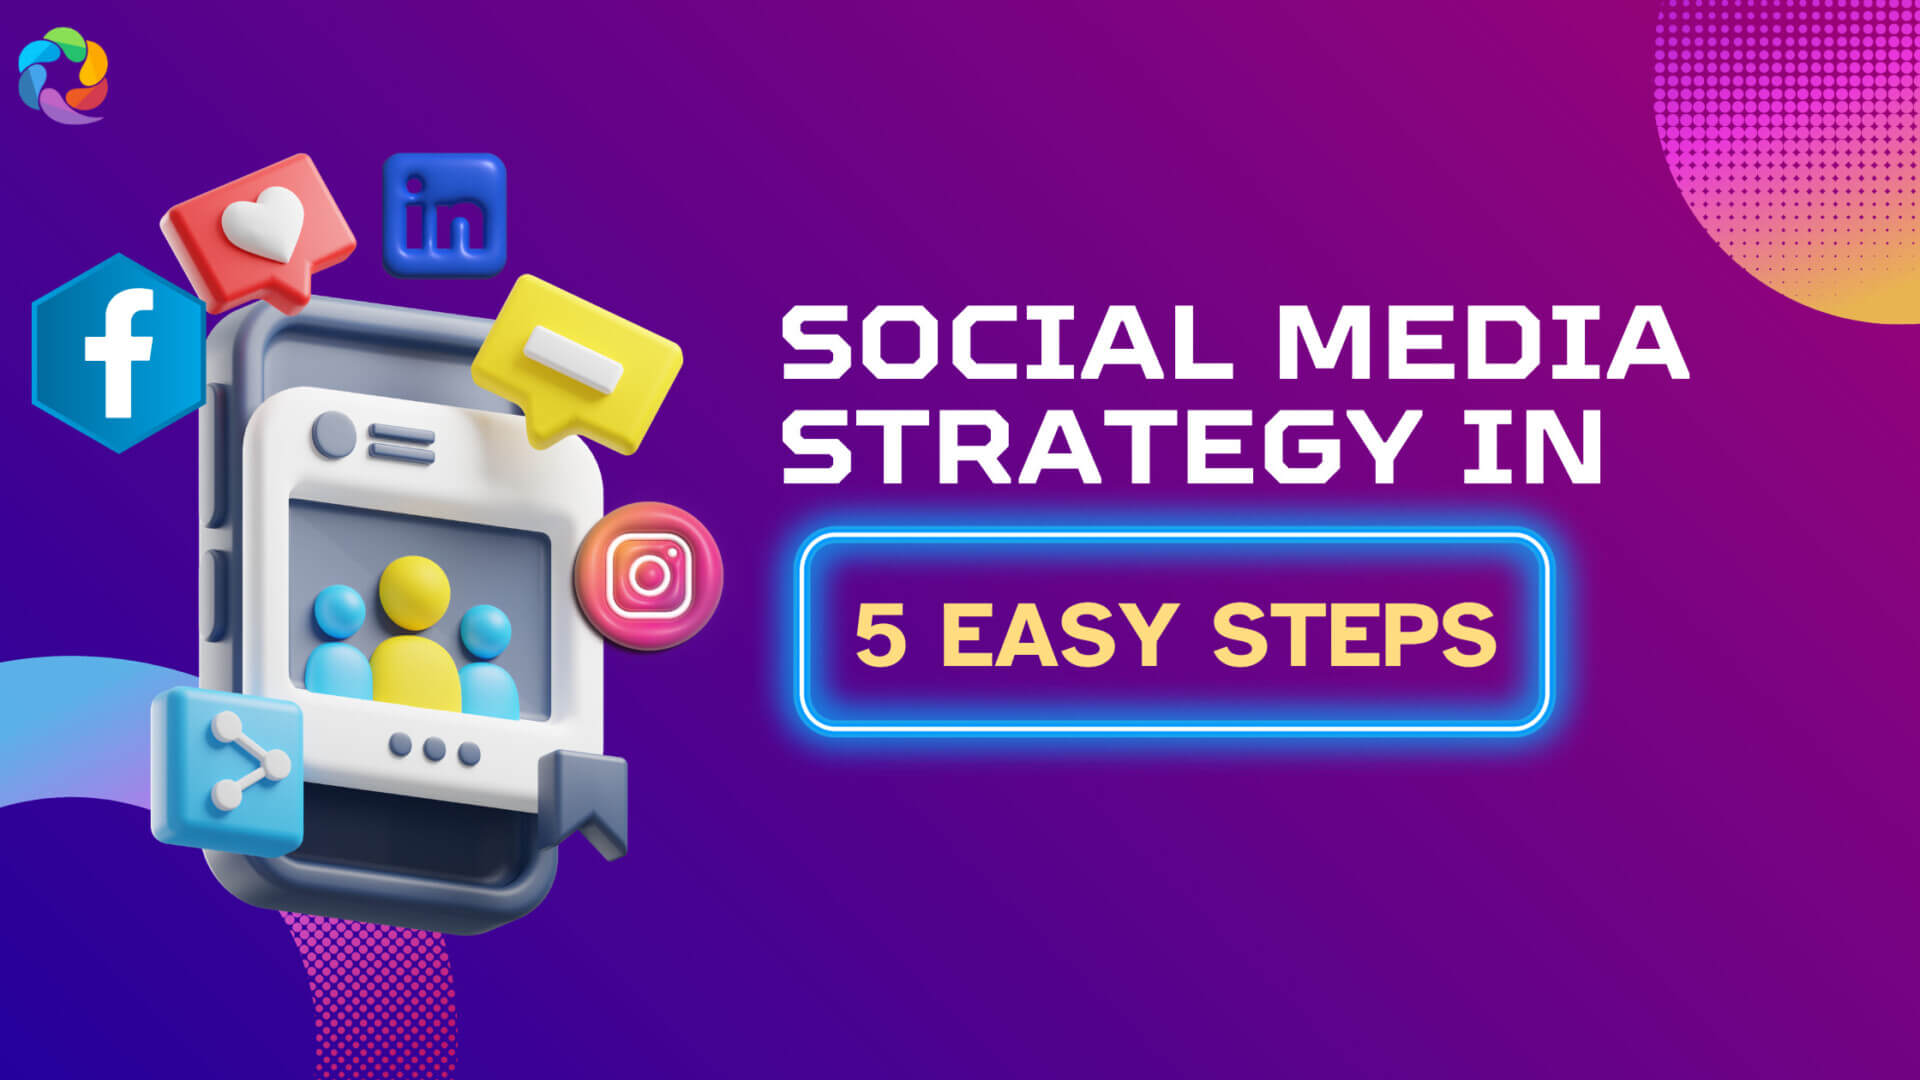 Social media strategy in 5 easy steps